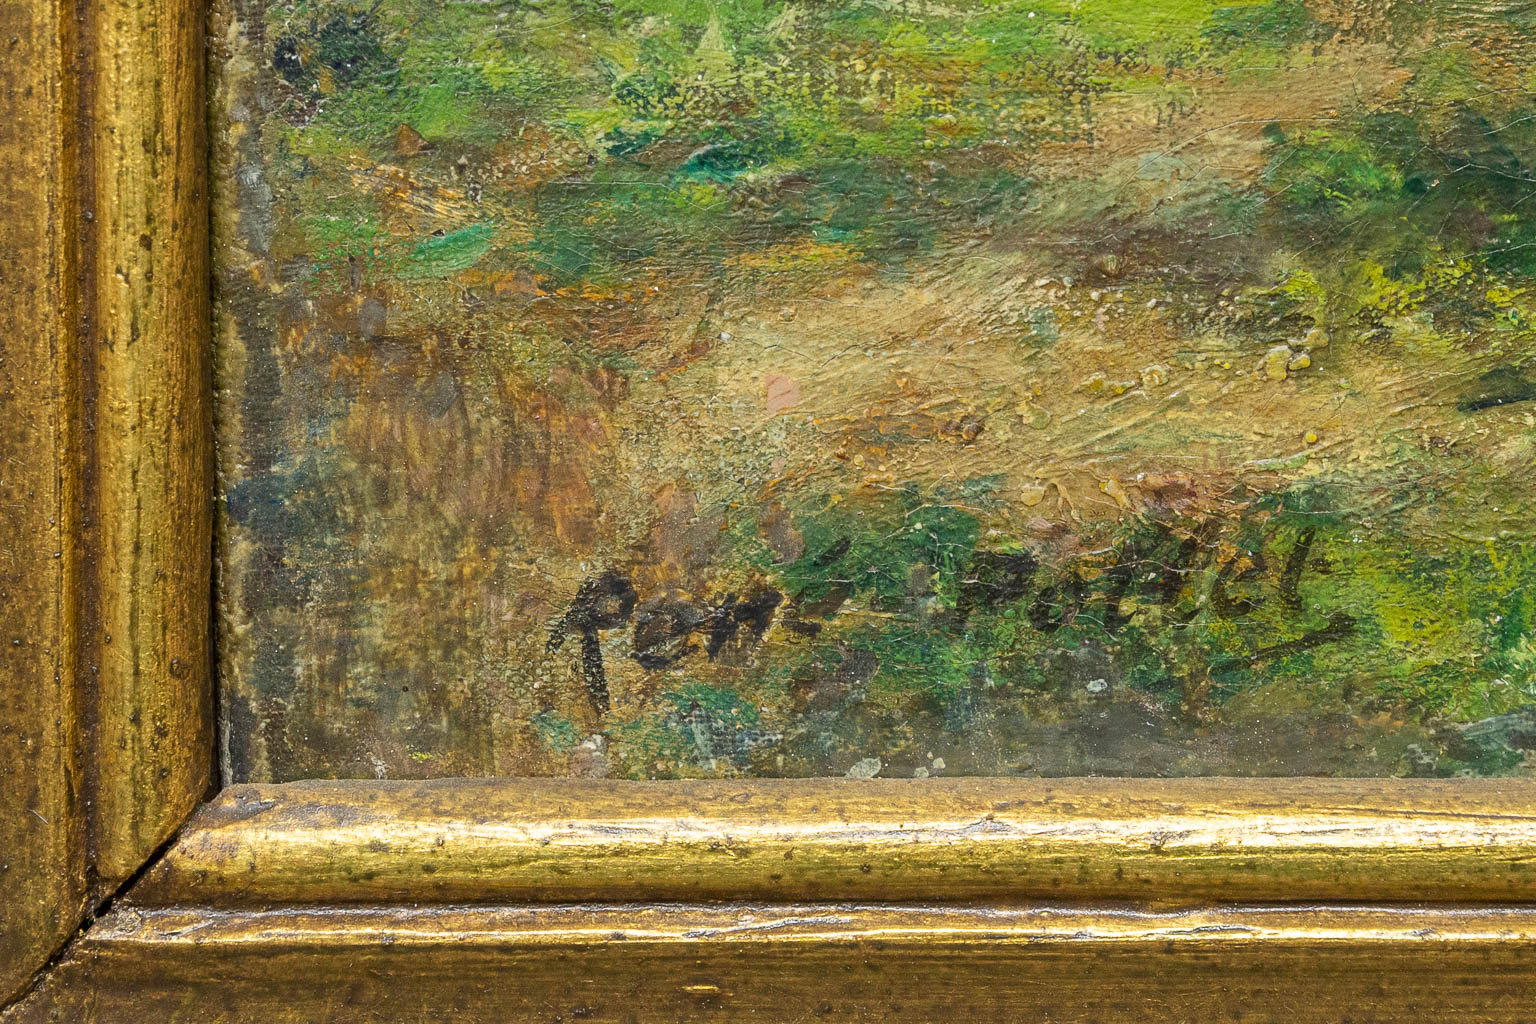 Rene POLLET (XIX) Landscape with cattle, oil on canvas. (56 x 39 cm)